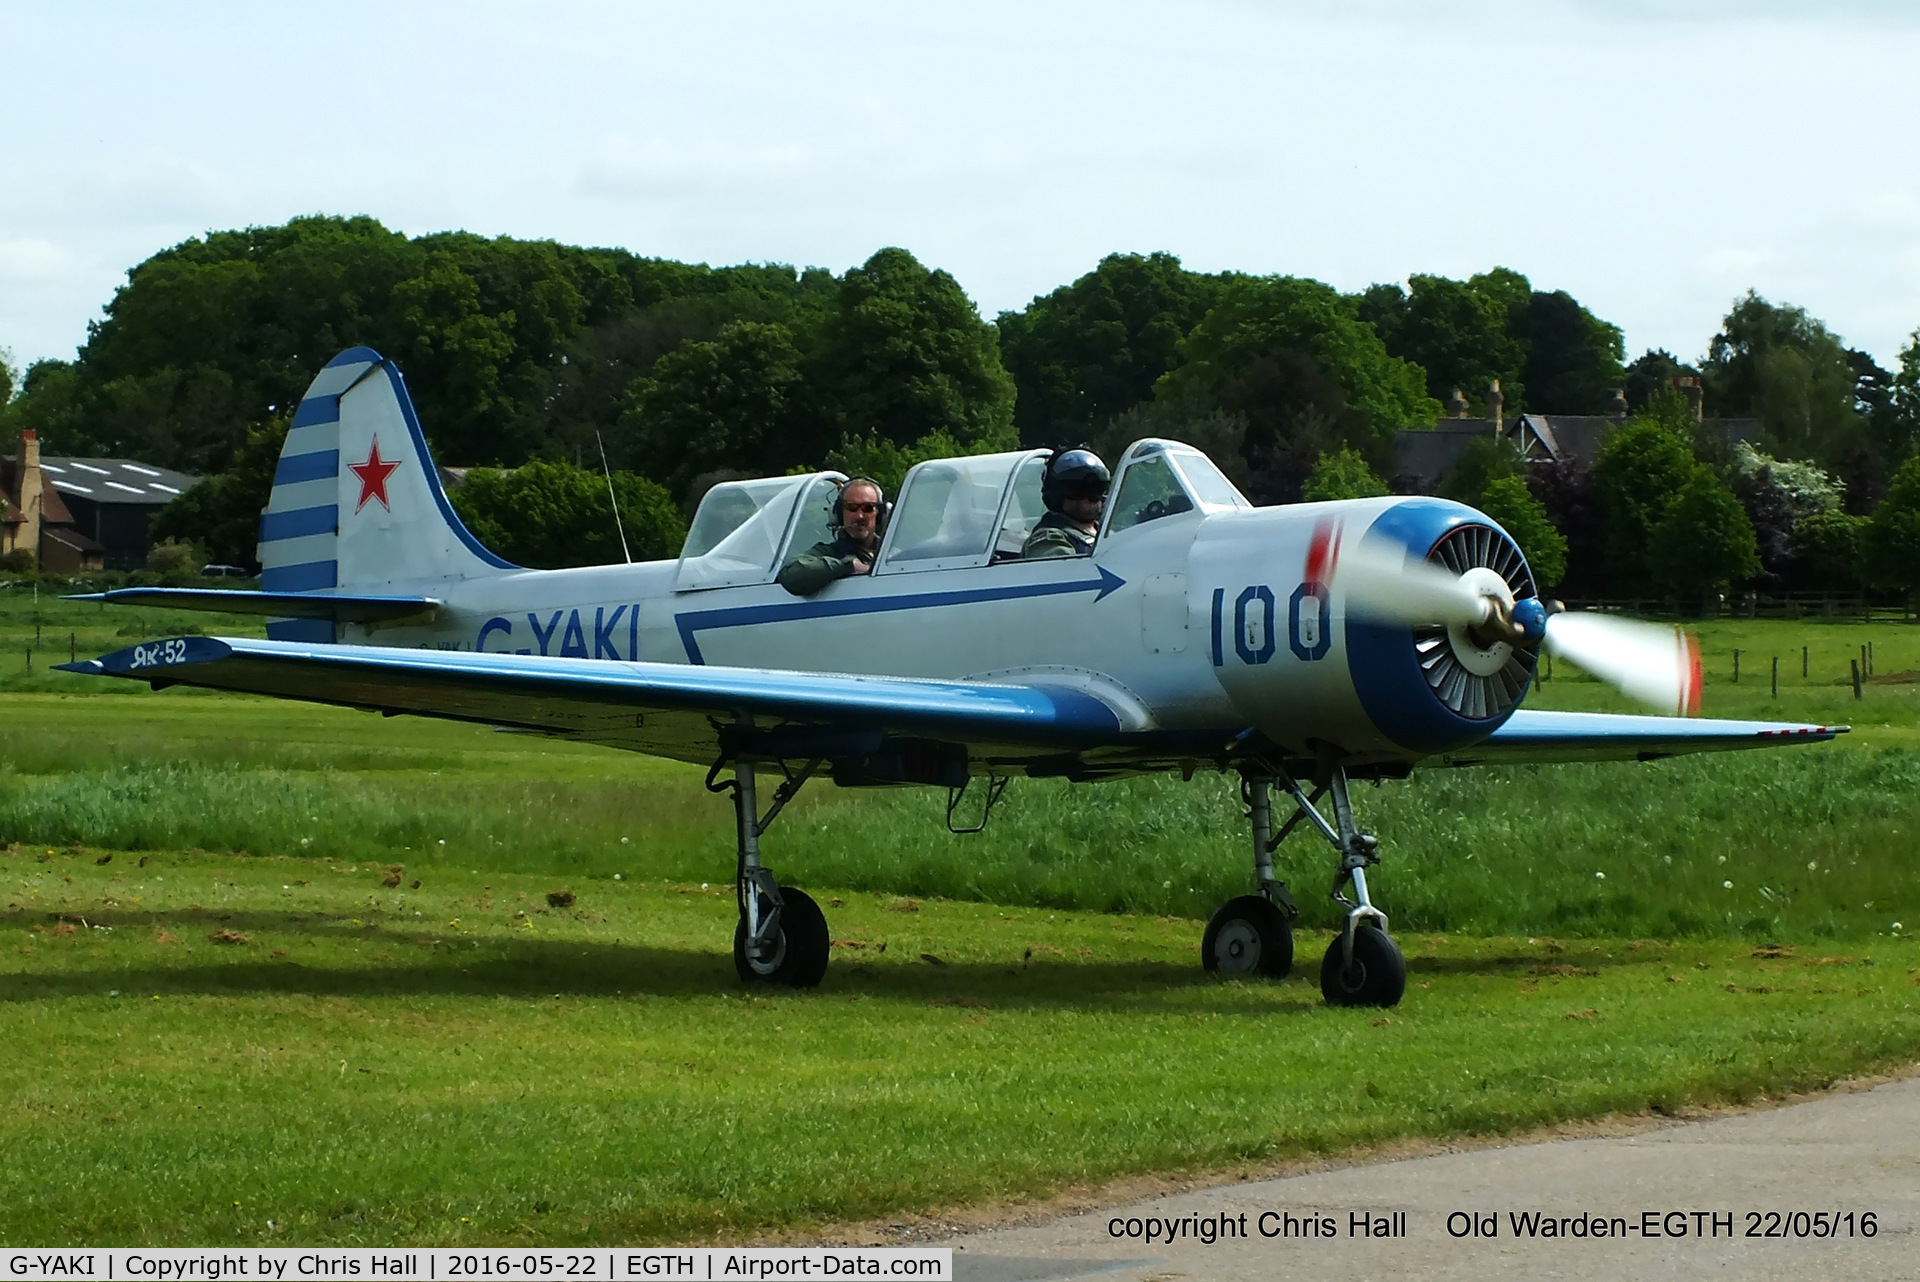 G-YAKI, 1986 Bacau Yak-52 C/N 866904, 70th Anniversary of the first flight of the de Havilland Chipmunk Fly-In at Old Warden